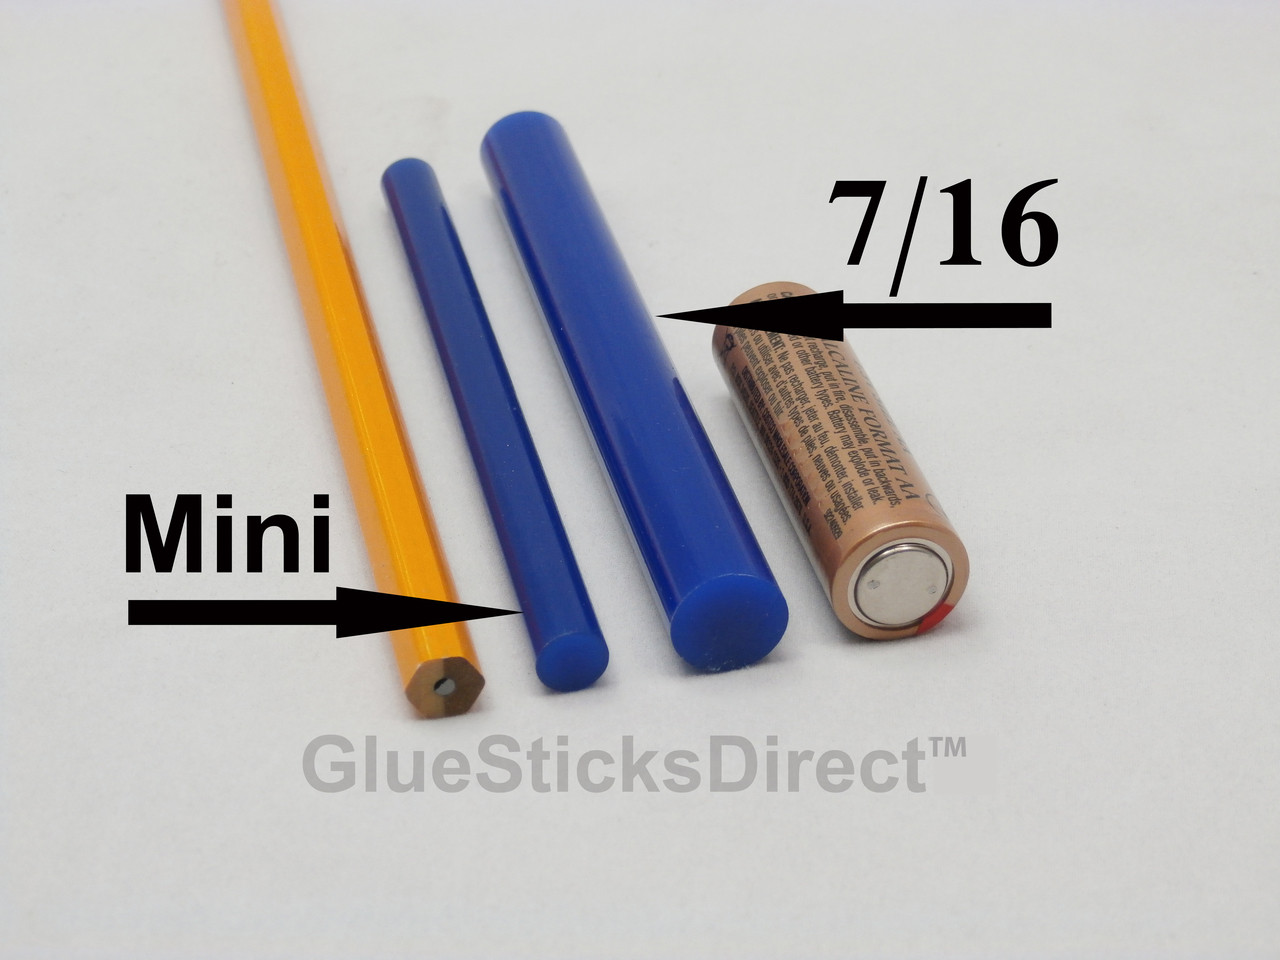 GlueSticksDirect Gold Metallic Colored Glue Sticks 7/16 X 4 5 lbs